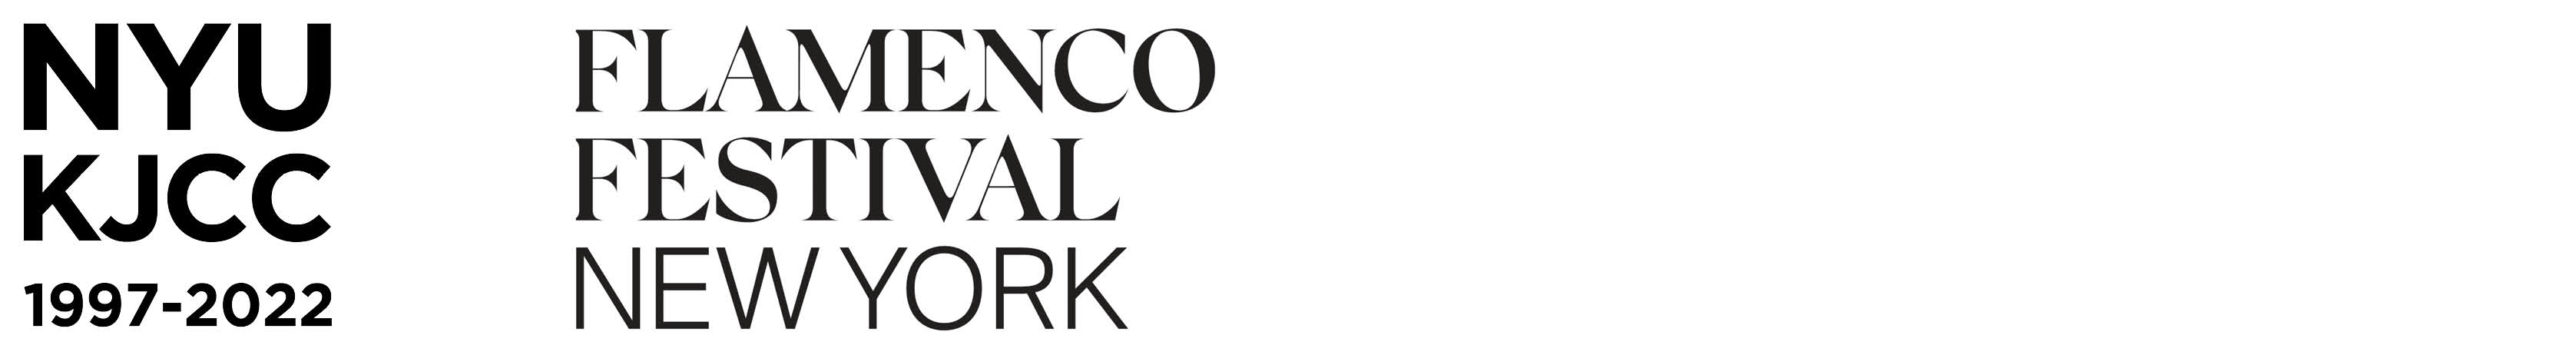 Logos: NYU KJCC 1997-2022. Flamenco Festival New York.